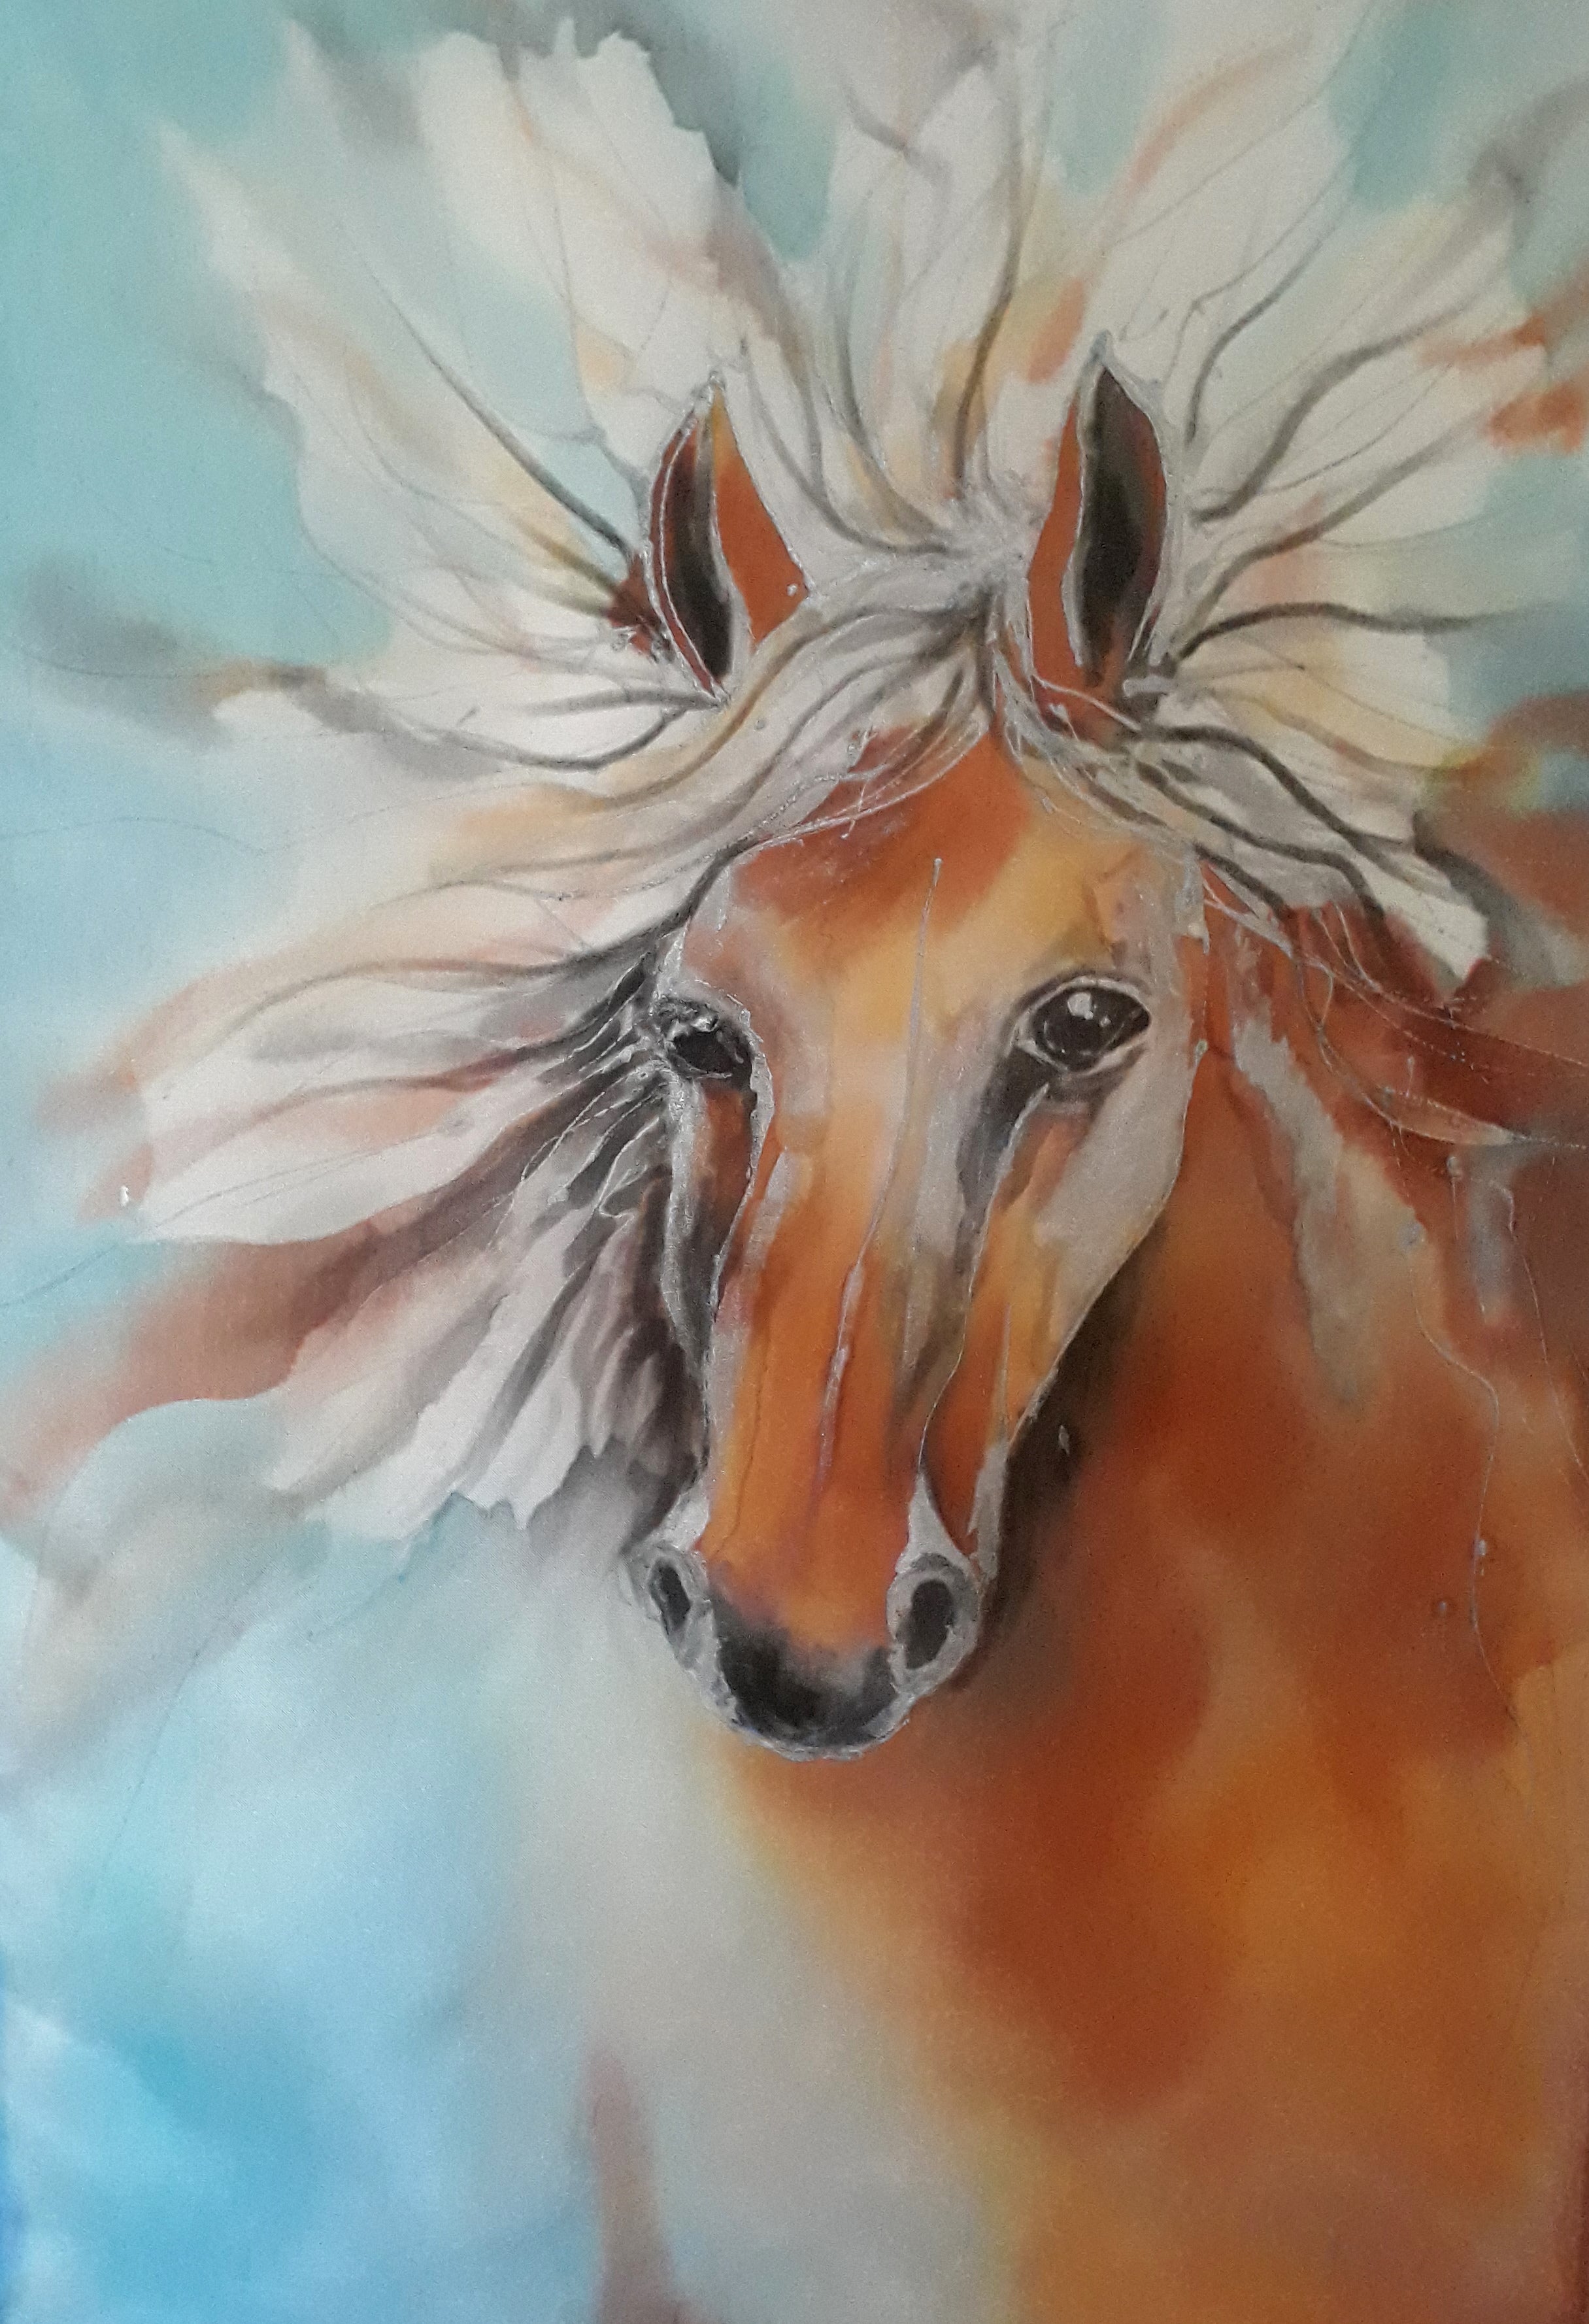 Equestrian Horse Lovers - Hand Painted Silk Scarf - Satherley Silks NZ